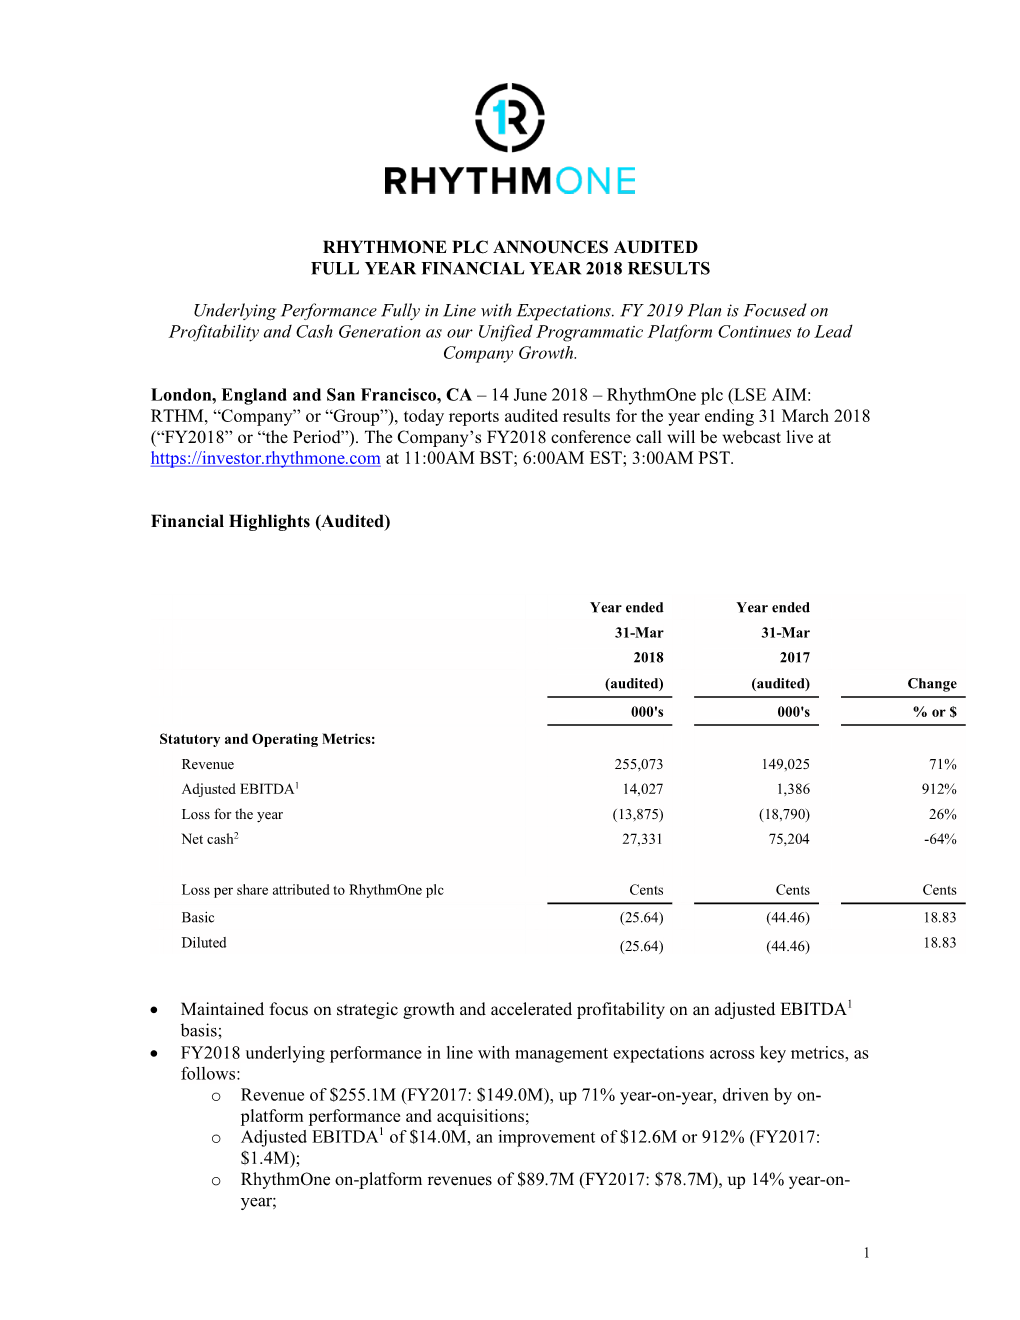 Rhythmone Plc Announces Audited Full Year Financial Year 2018 Results